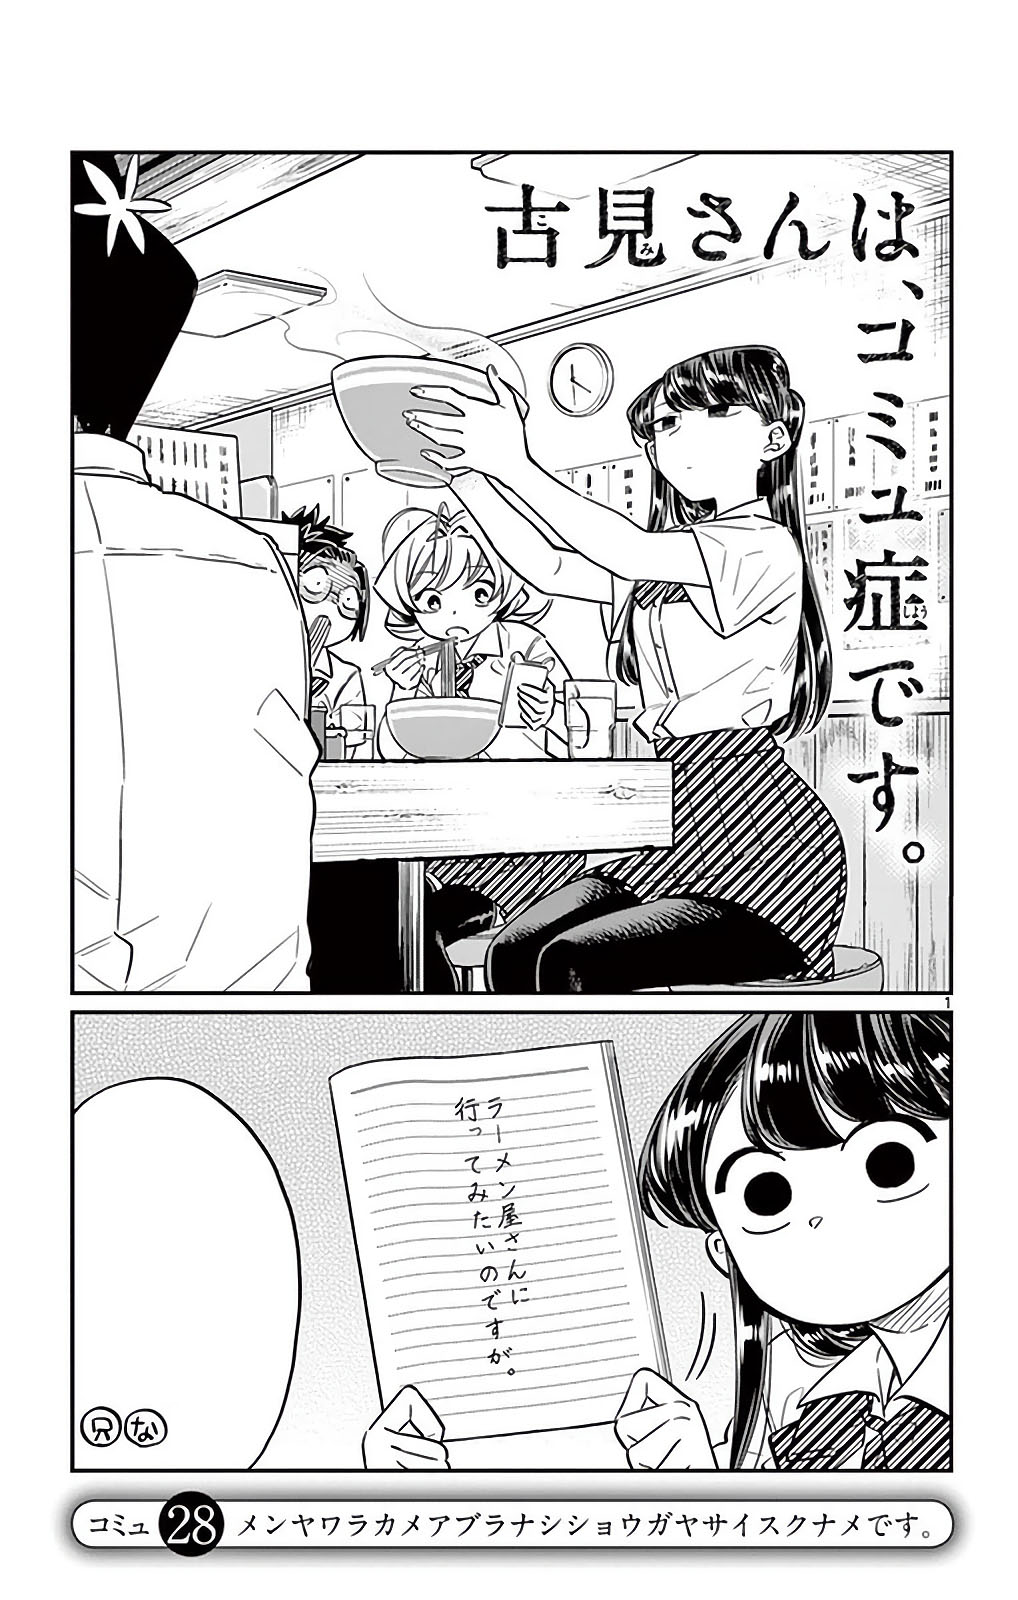 Twice the Baka - Daily mood Manga: komi-san wa komyushou